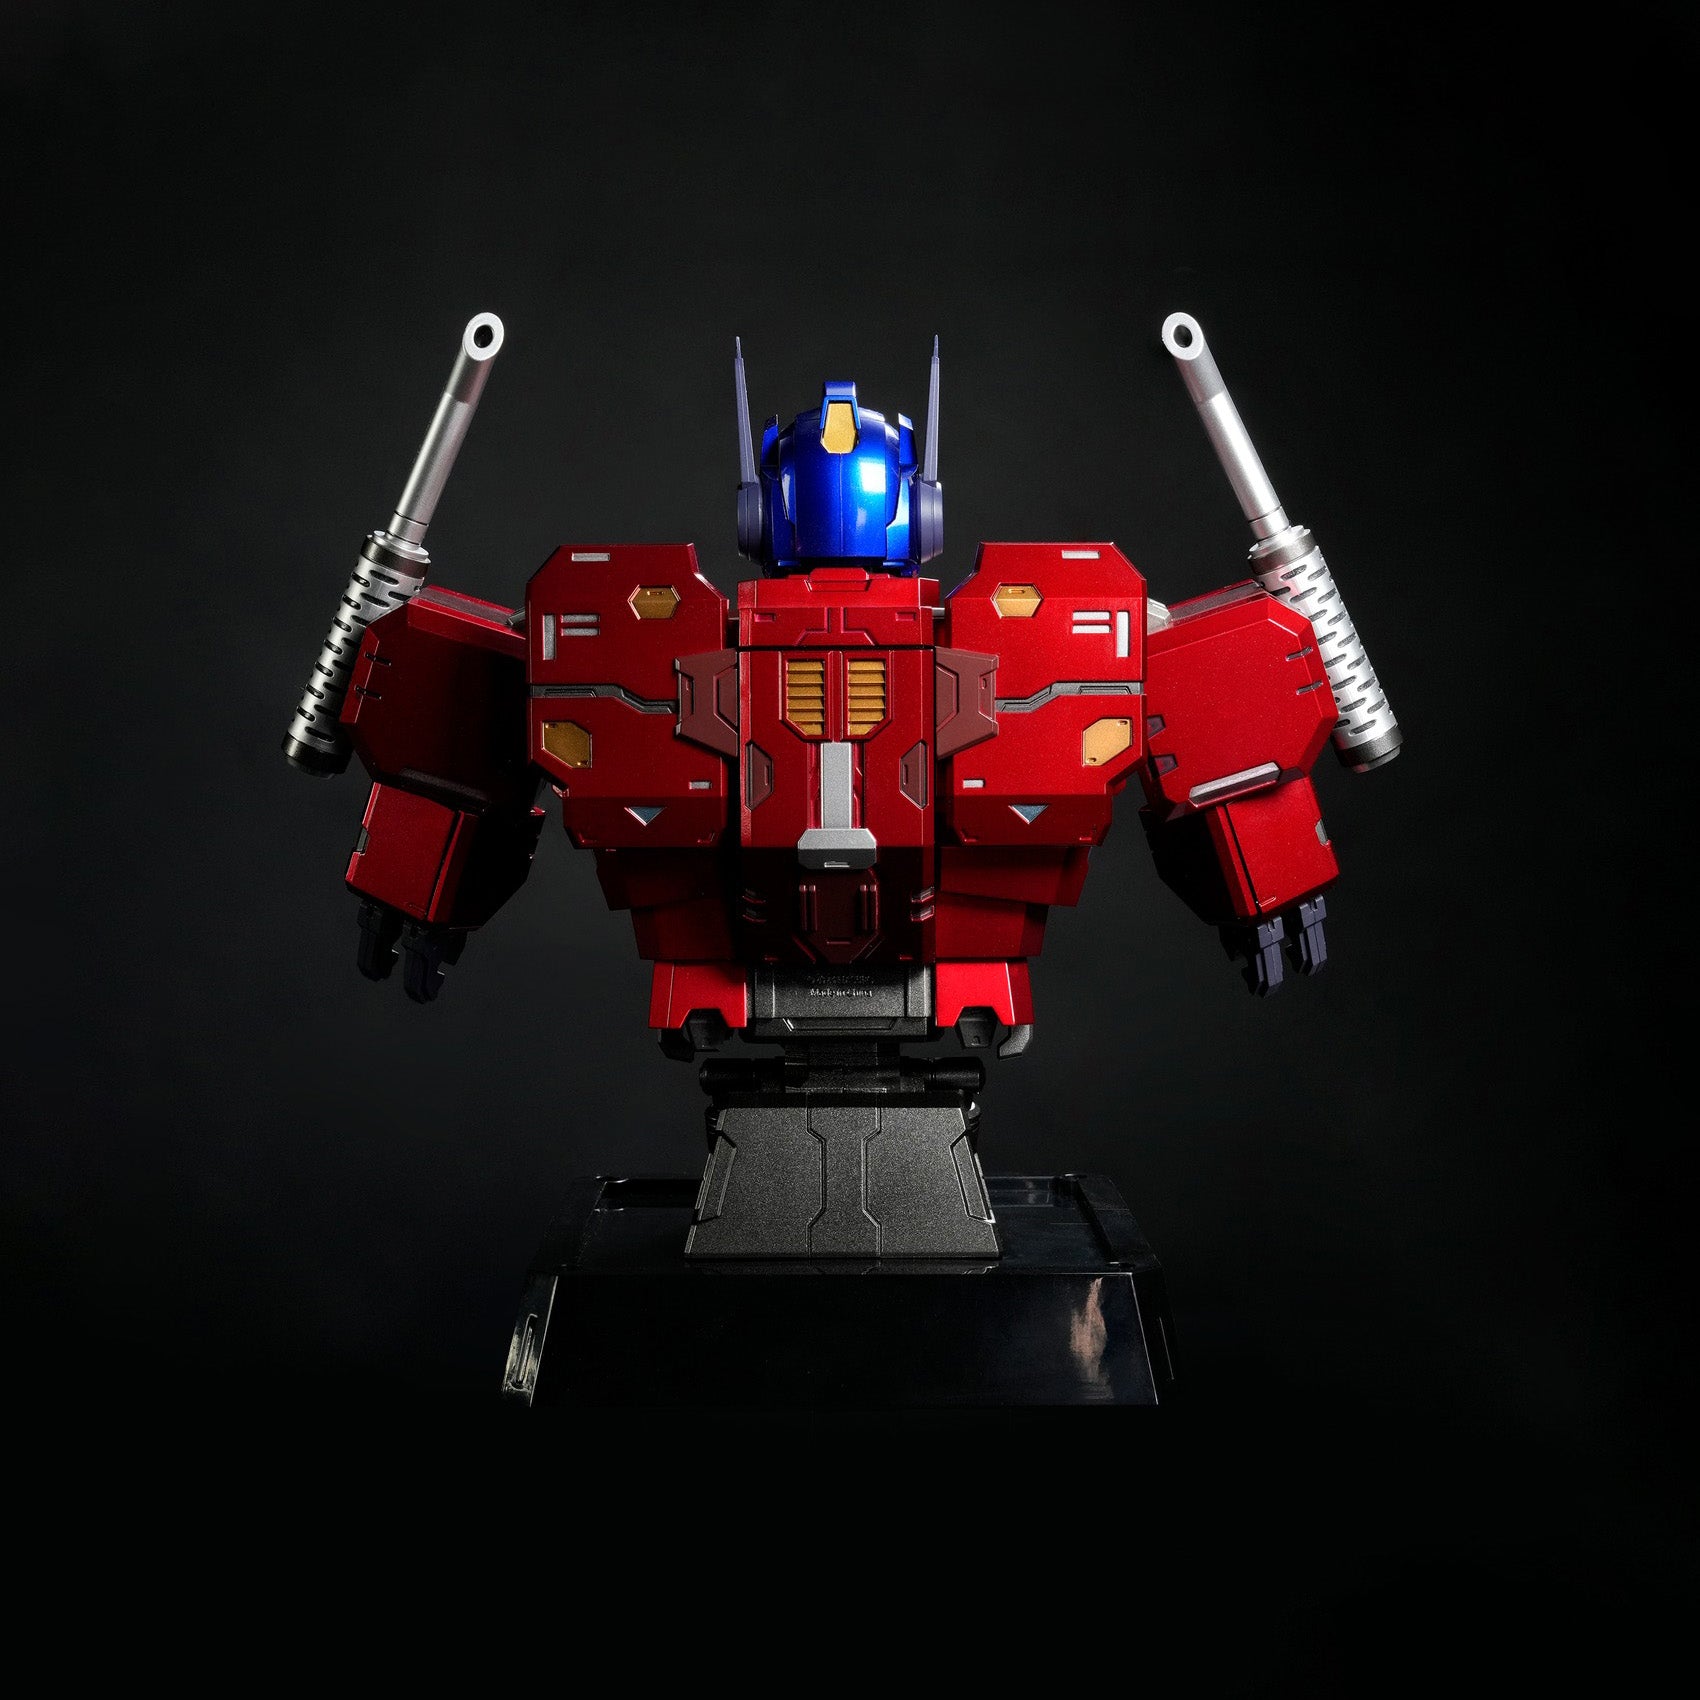 Unix Square - Transformers G1 - Optimus Prime Mechanic Bust